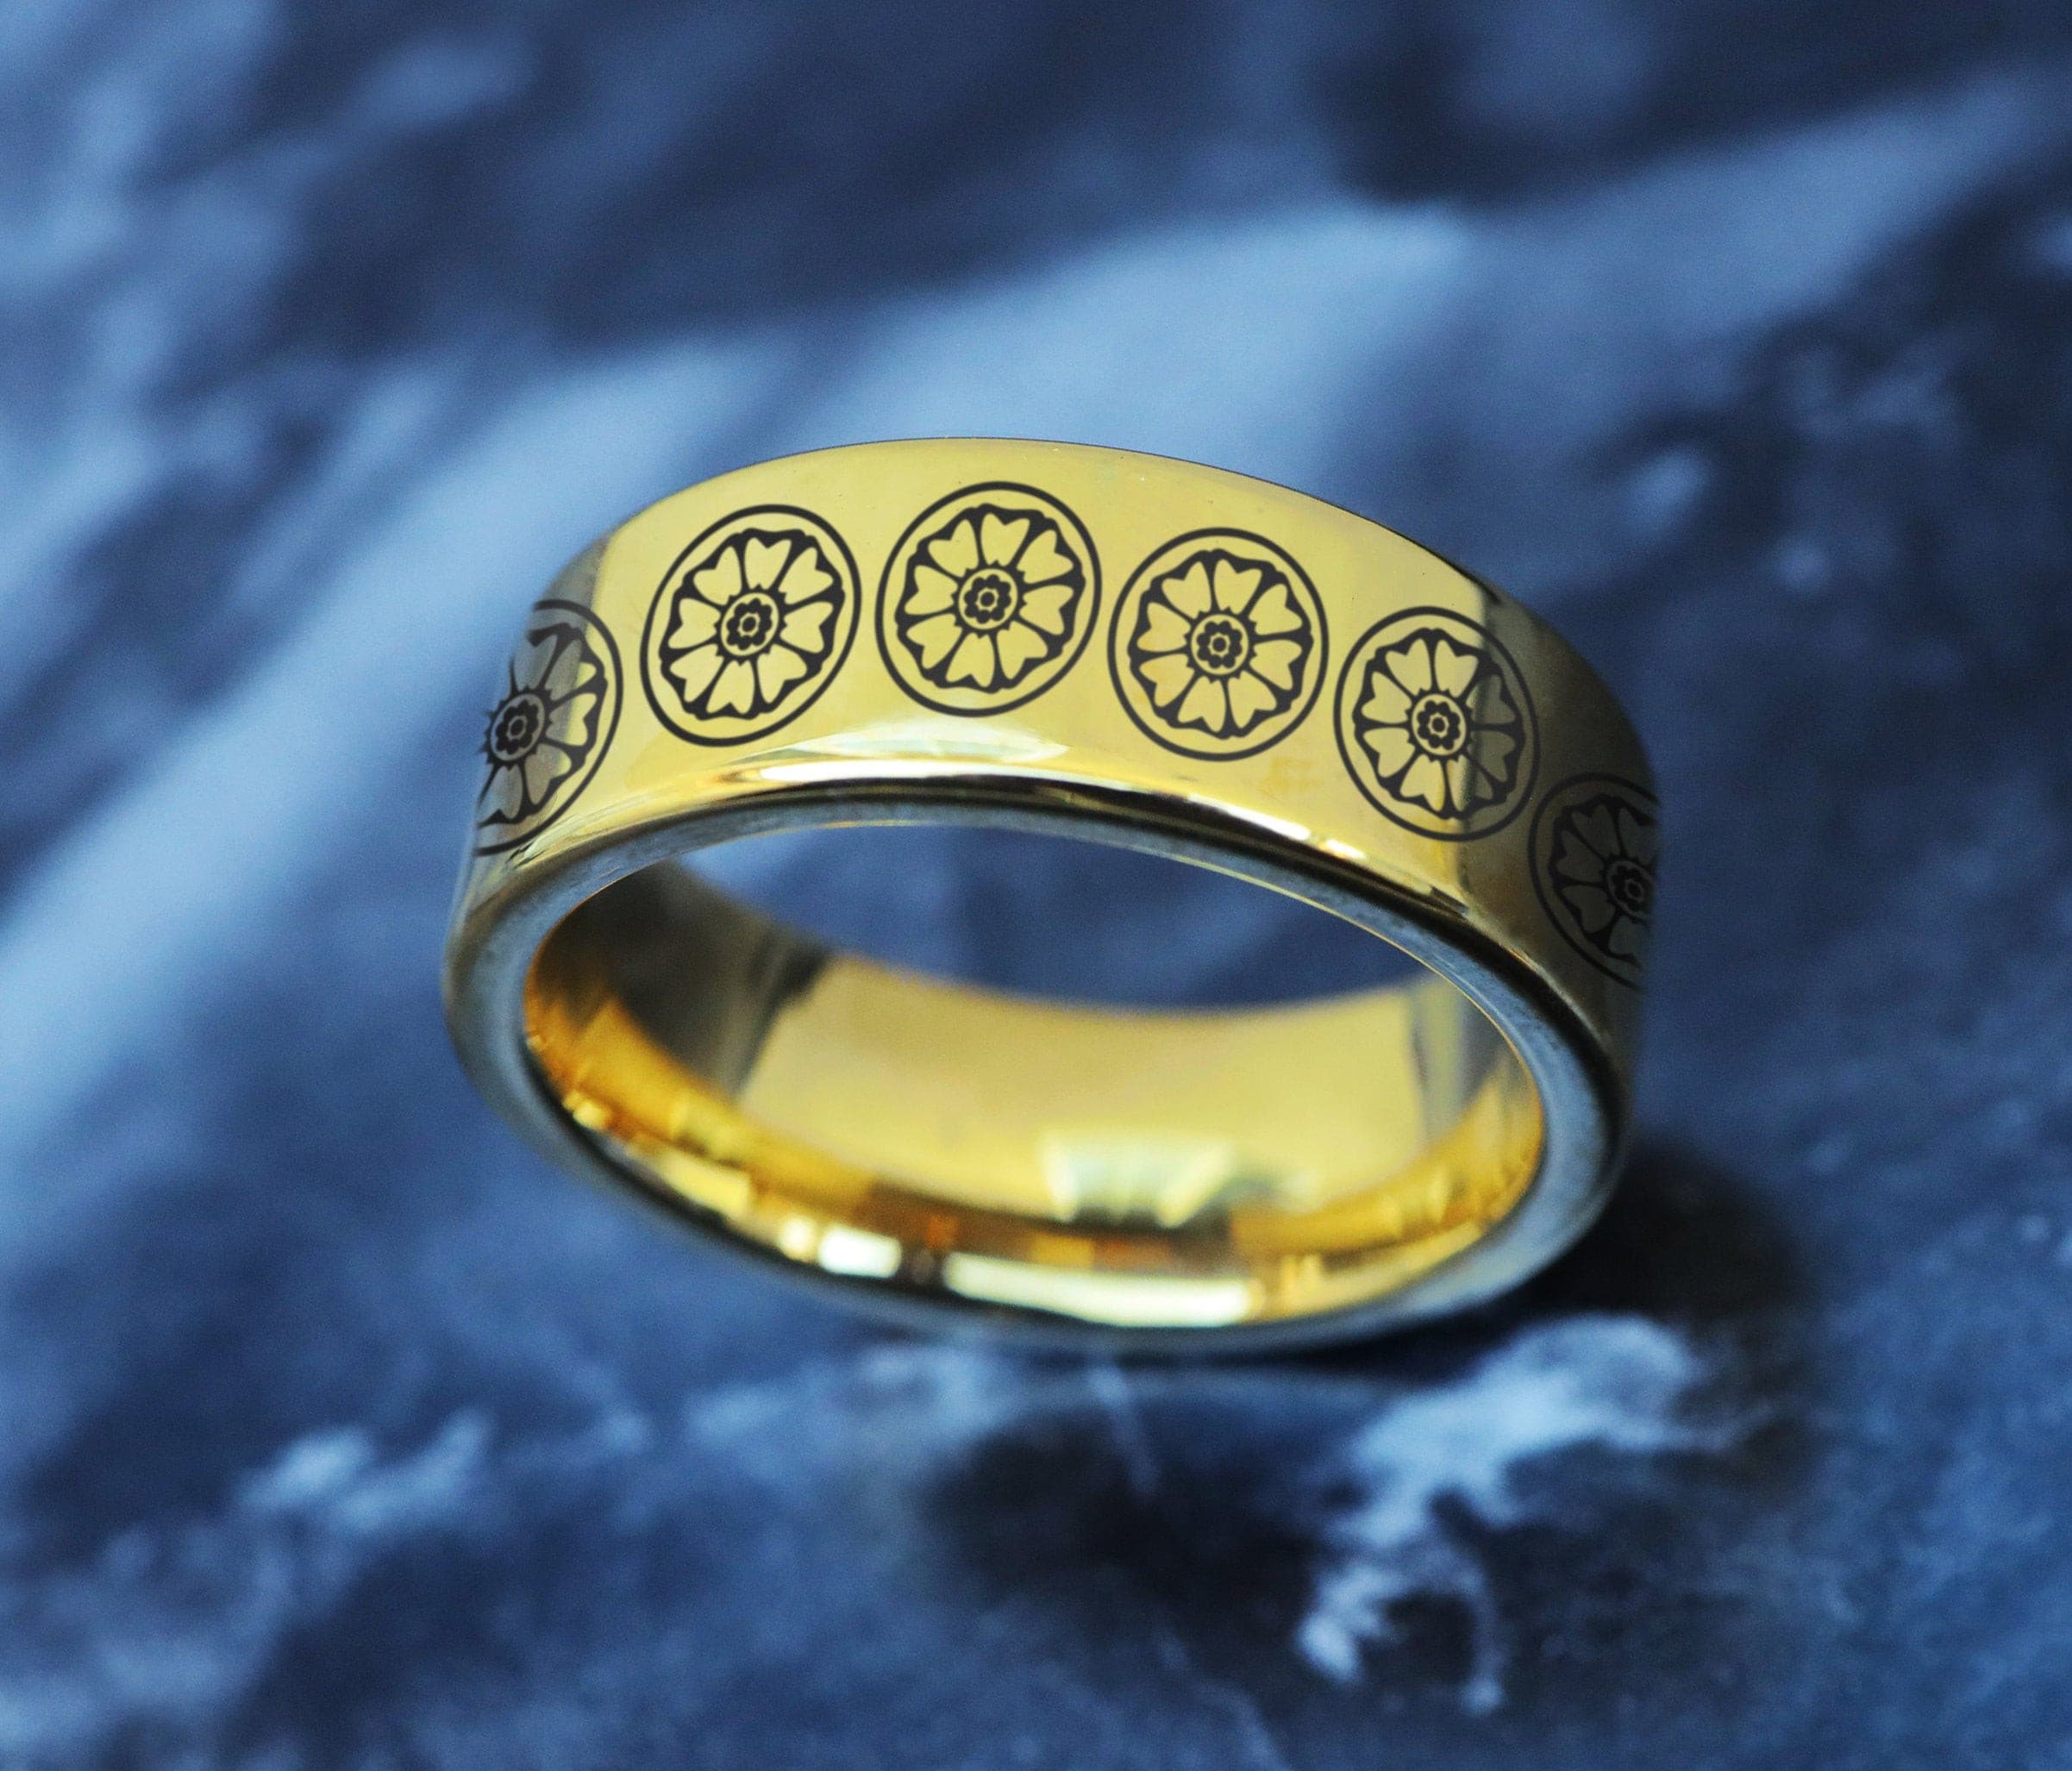 Personalized Ring - Fingerprints Ring - Unique Wedding Ring - Wedding Bend  - Memorial Ring - Custom Order Ring - Gold Ring - Precious Wedding Ring